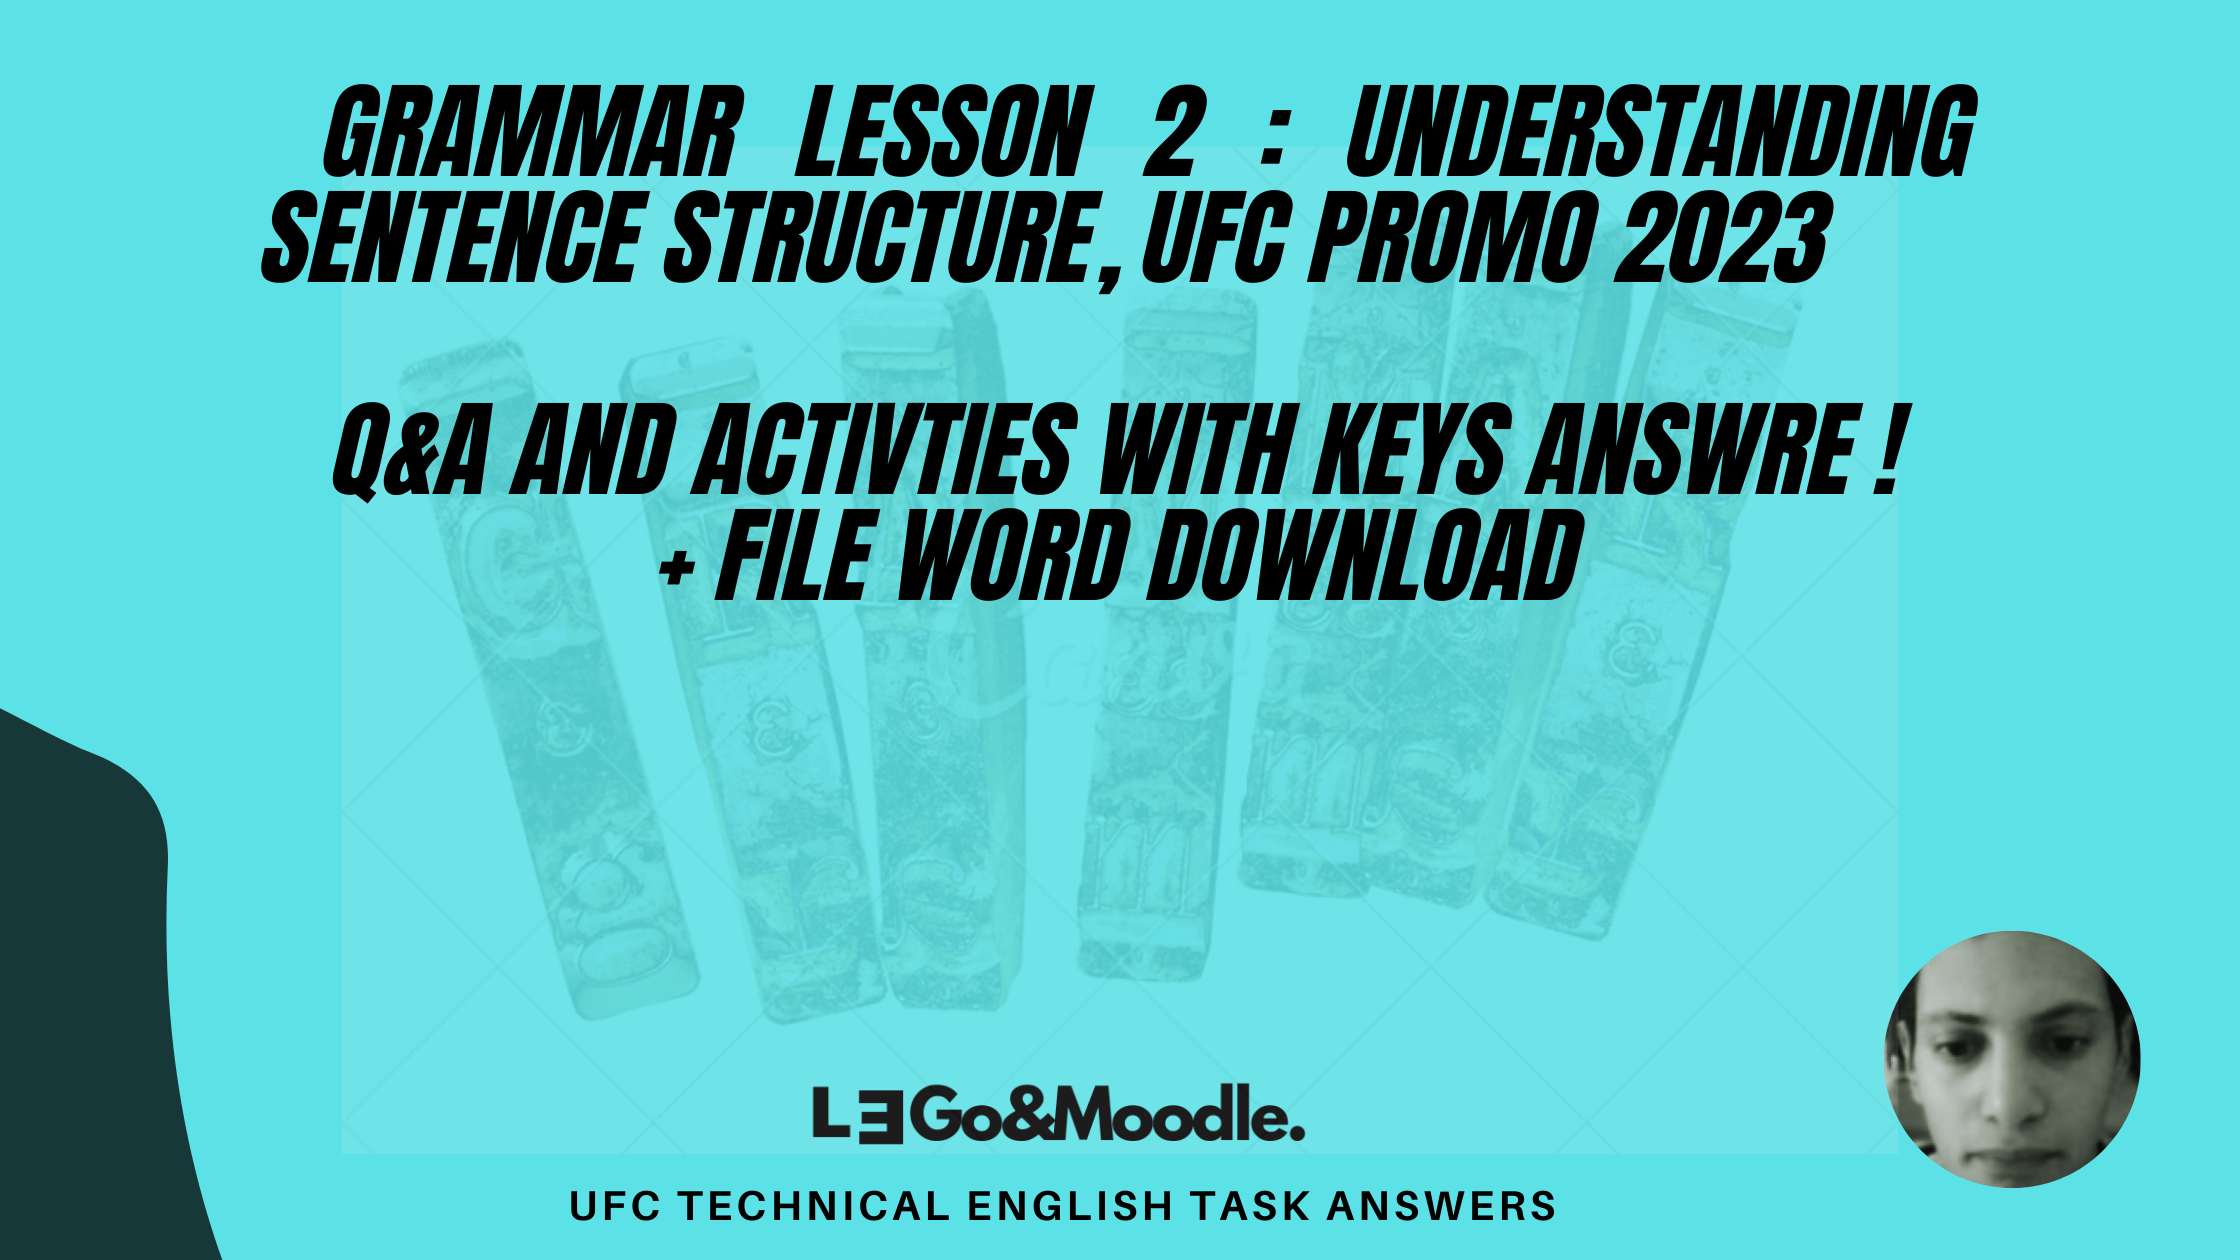 Grammar lesson 2 : Understanding Sentence Structure, UFC promo 2023